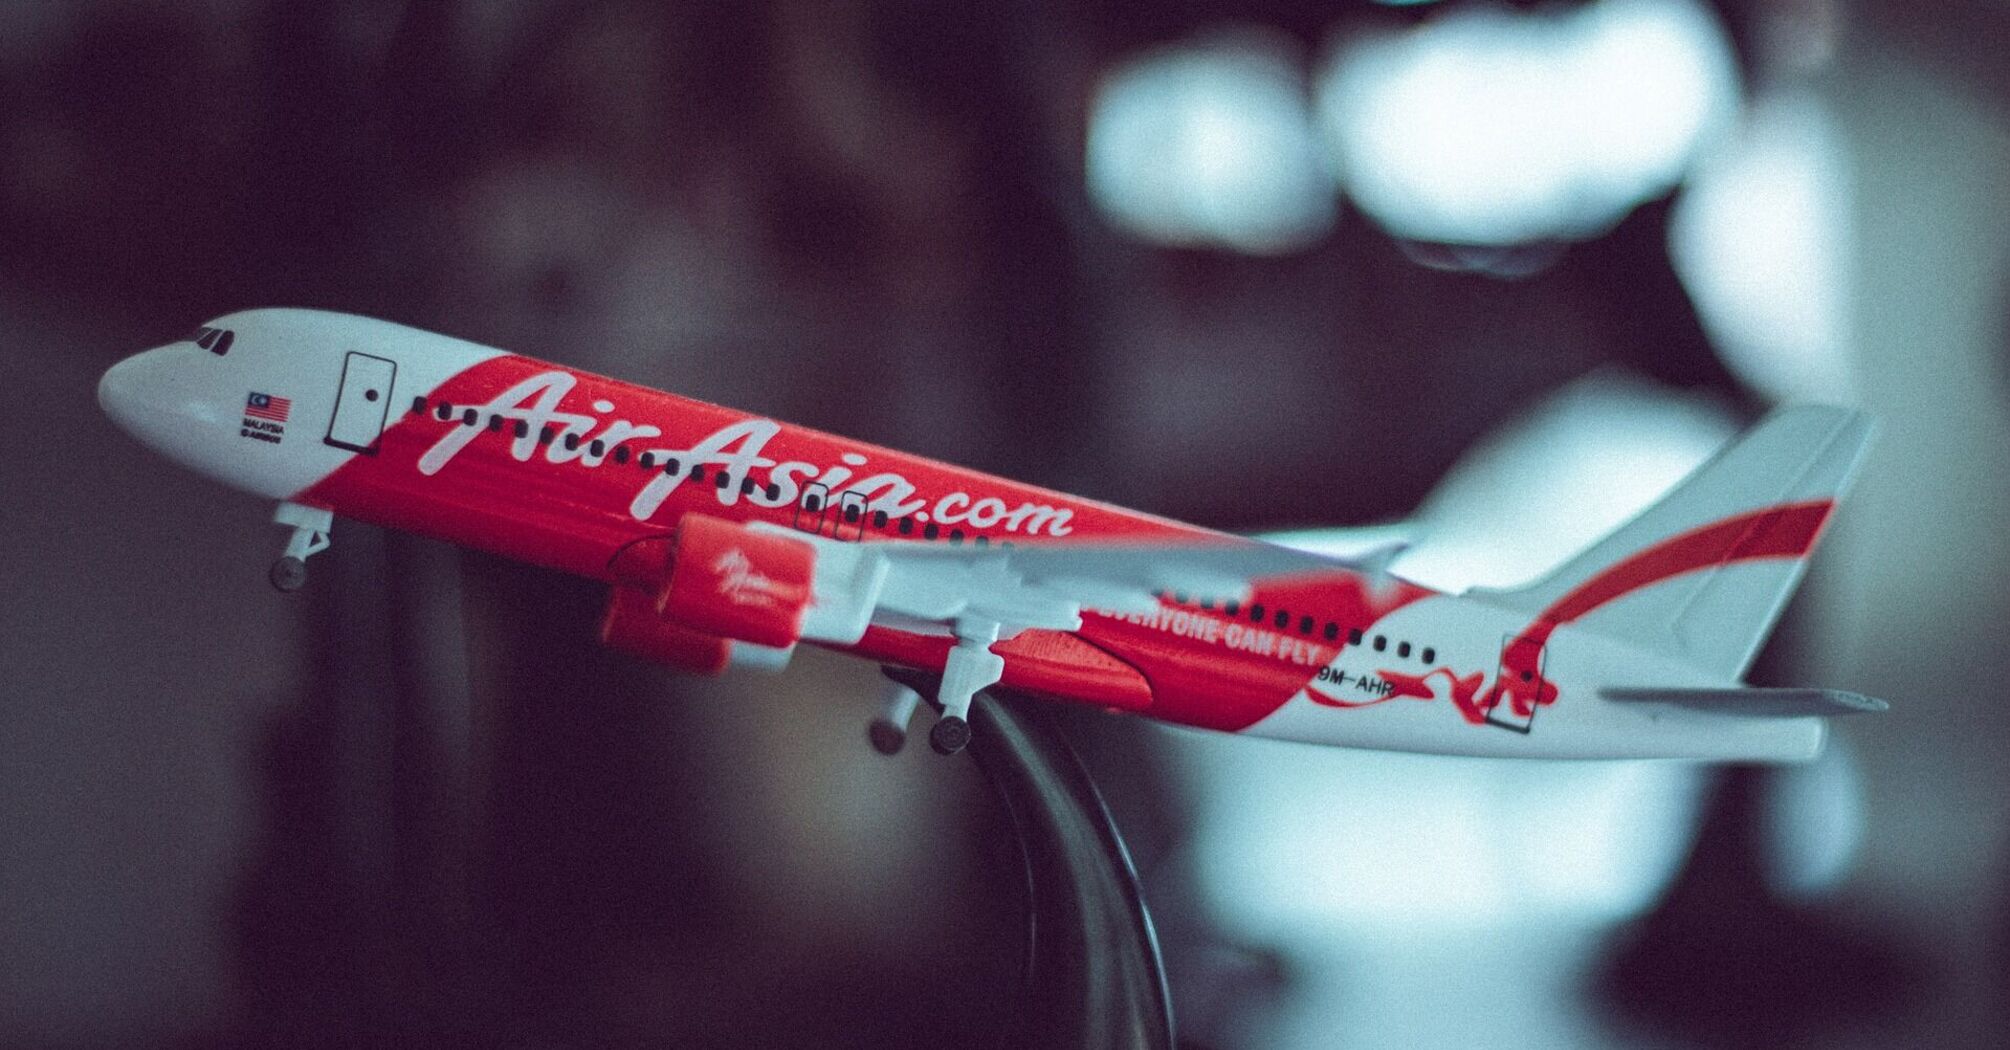 Miniature AirAsia airplane model on a blurred background